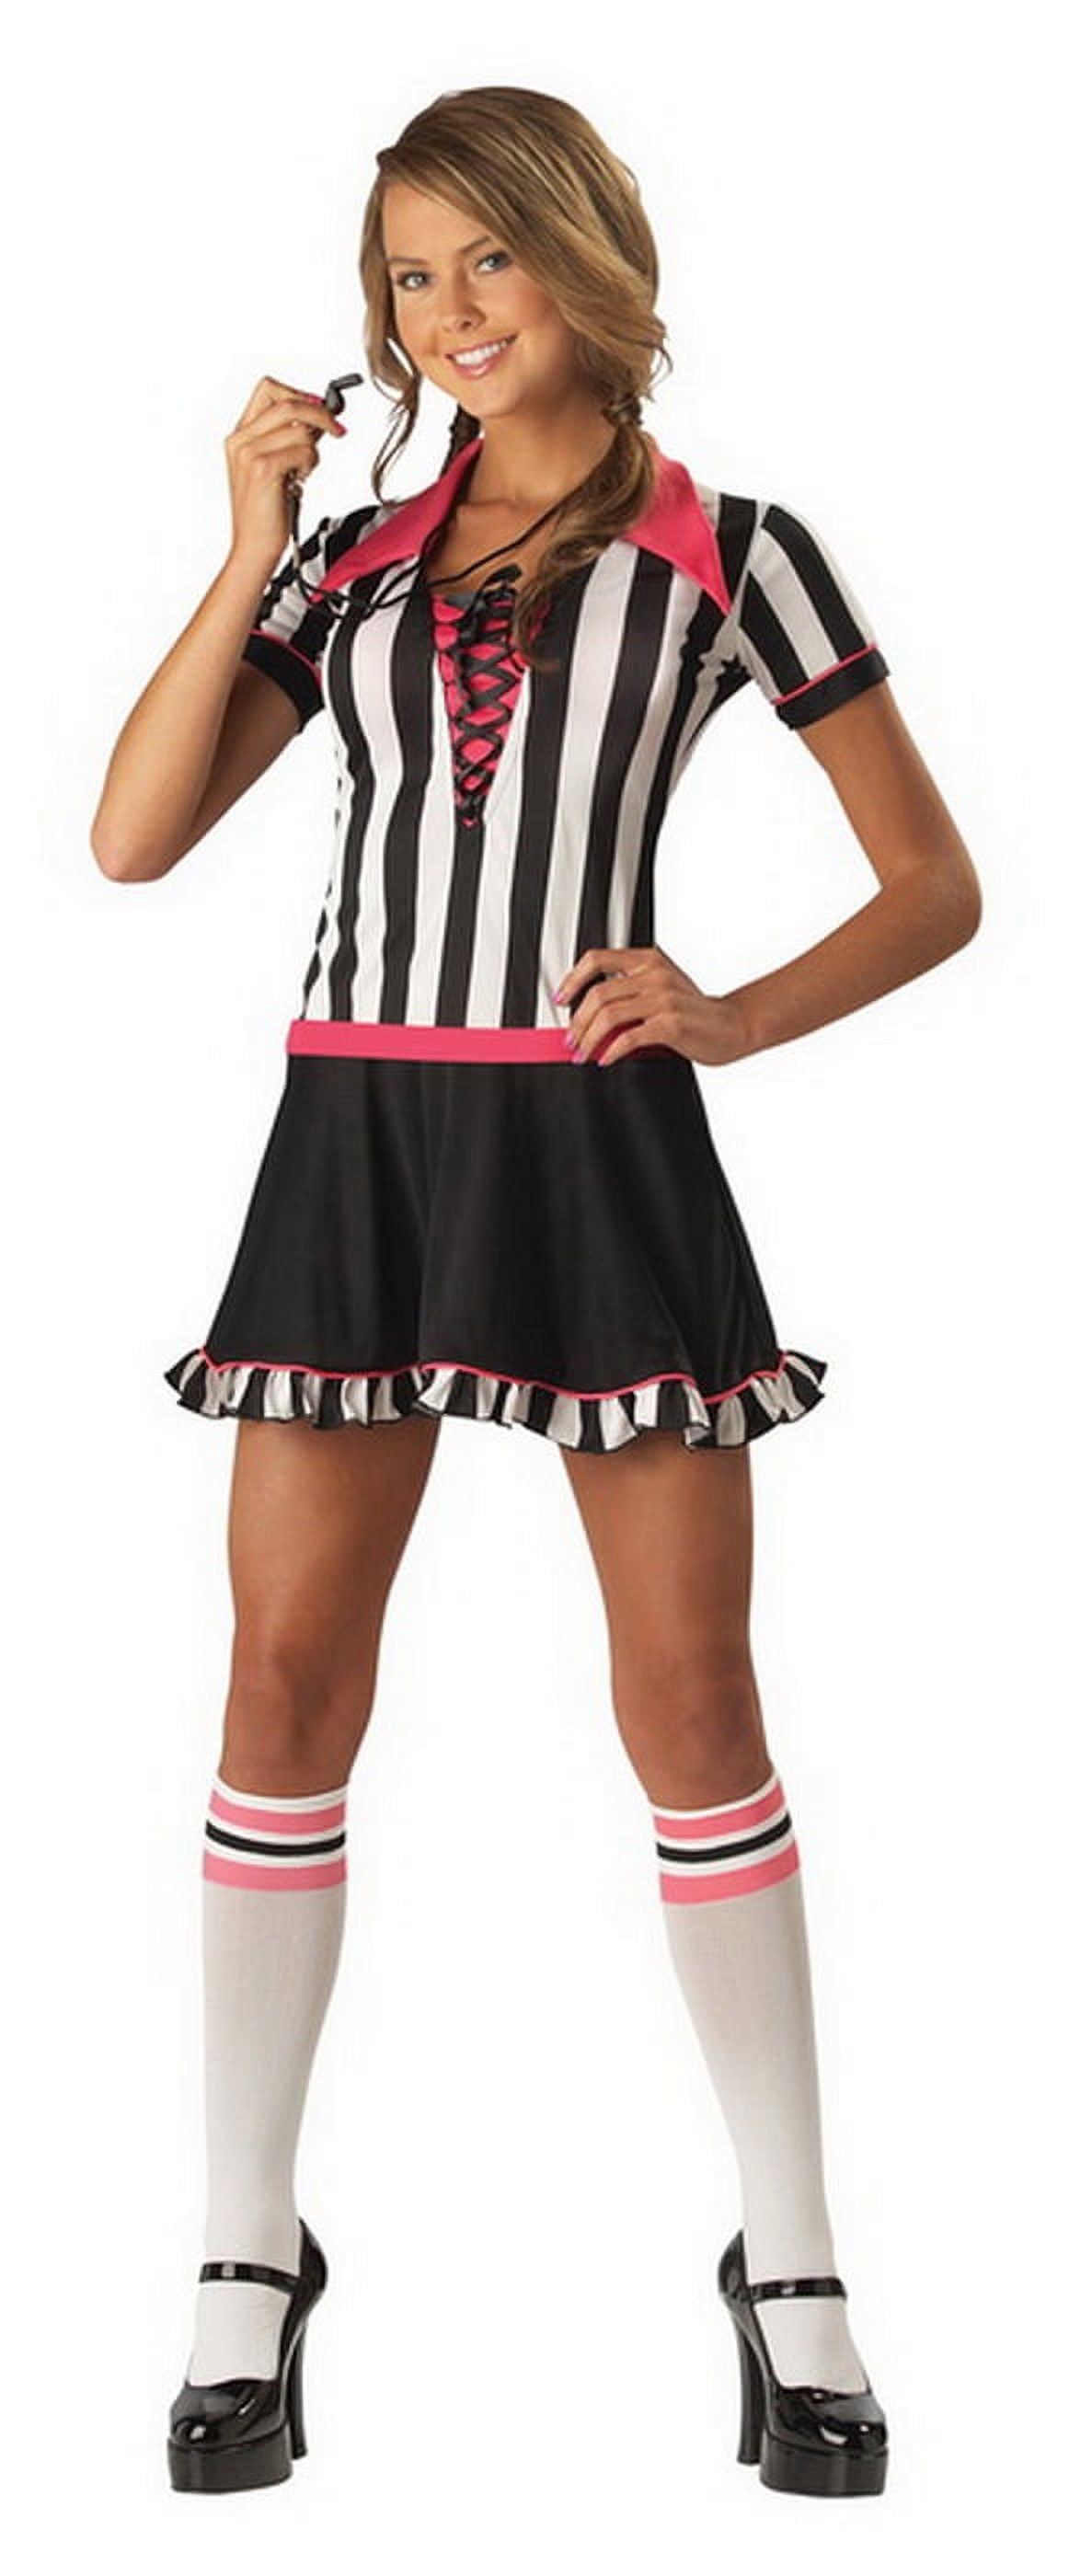 Racy Referee Teen Halloween Costume - Walmart.com